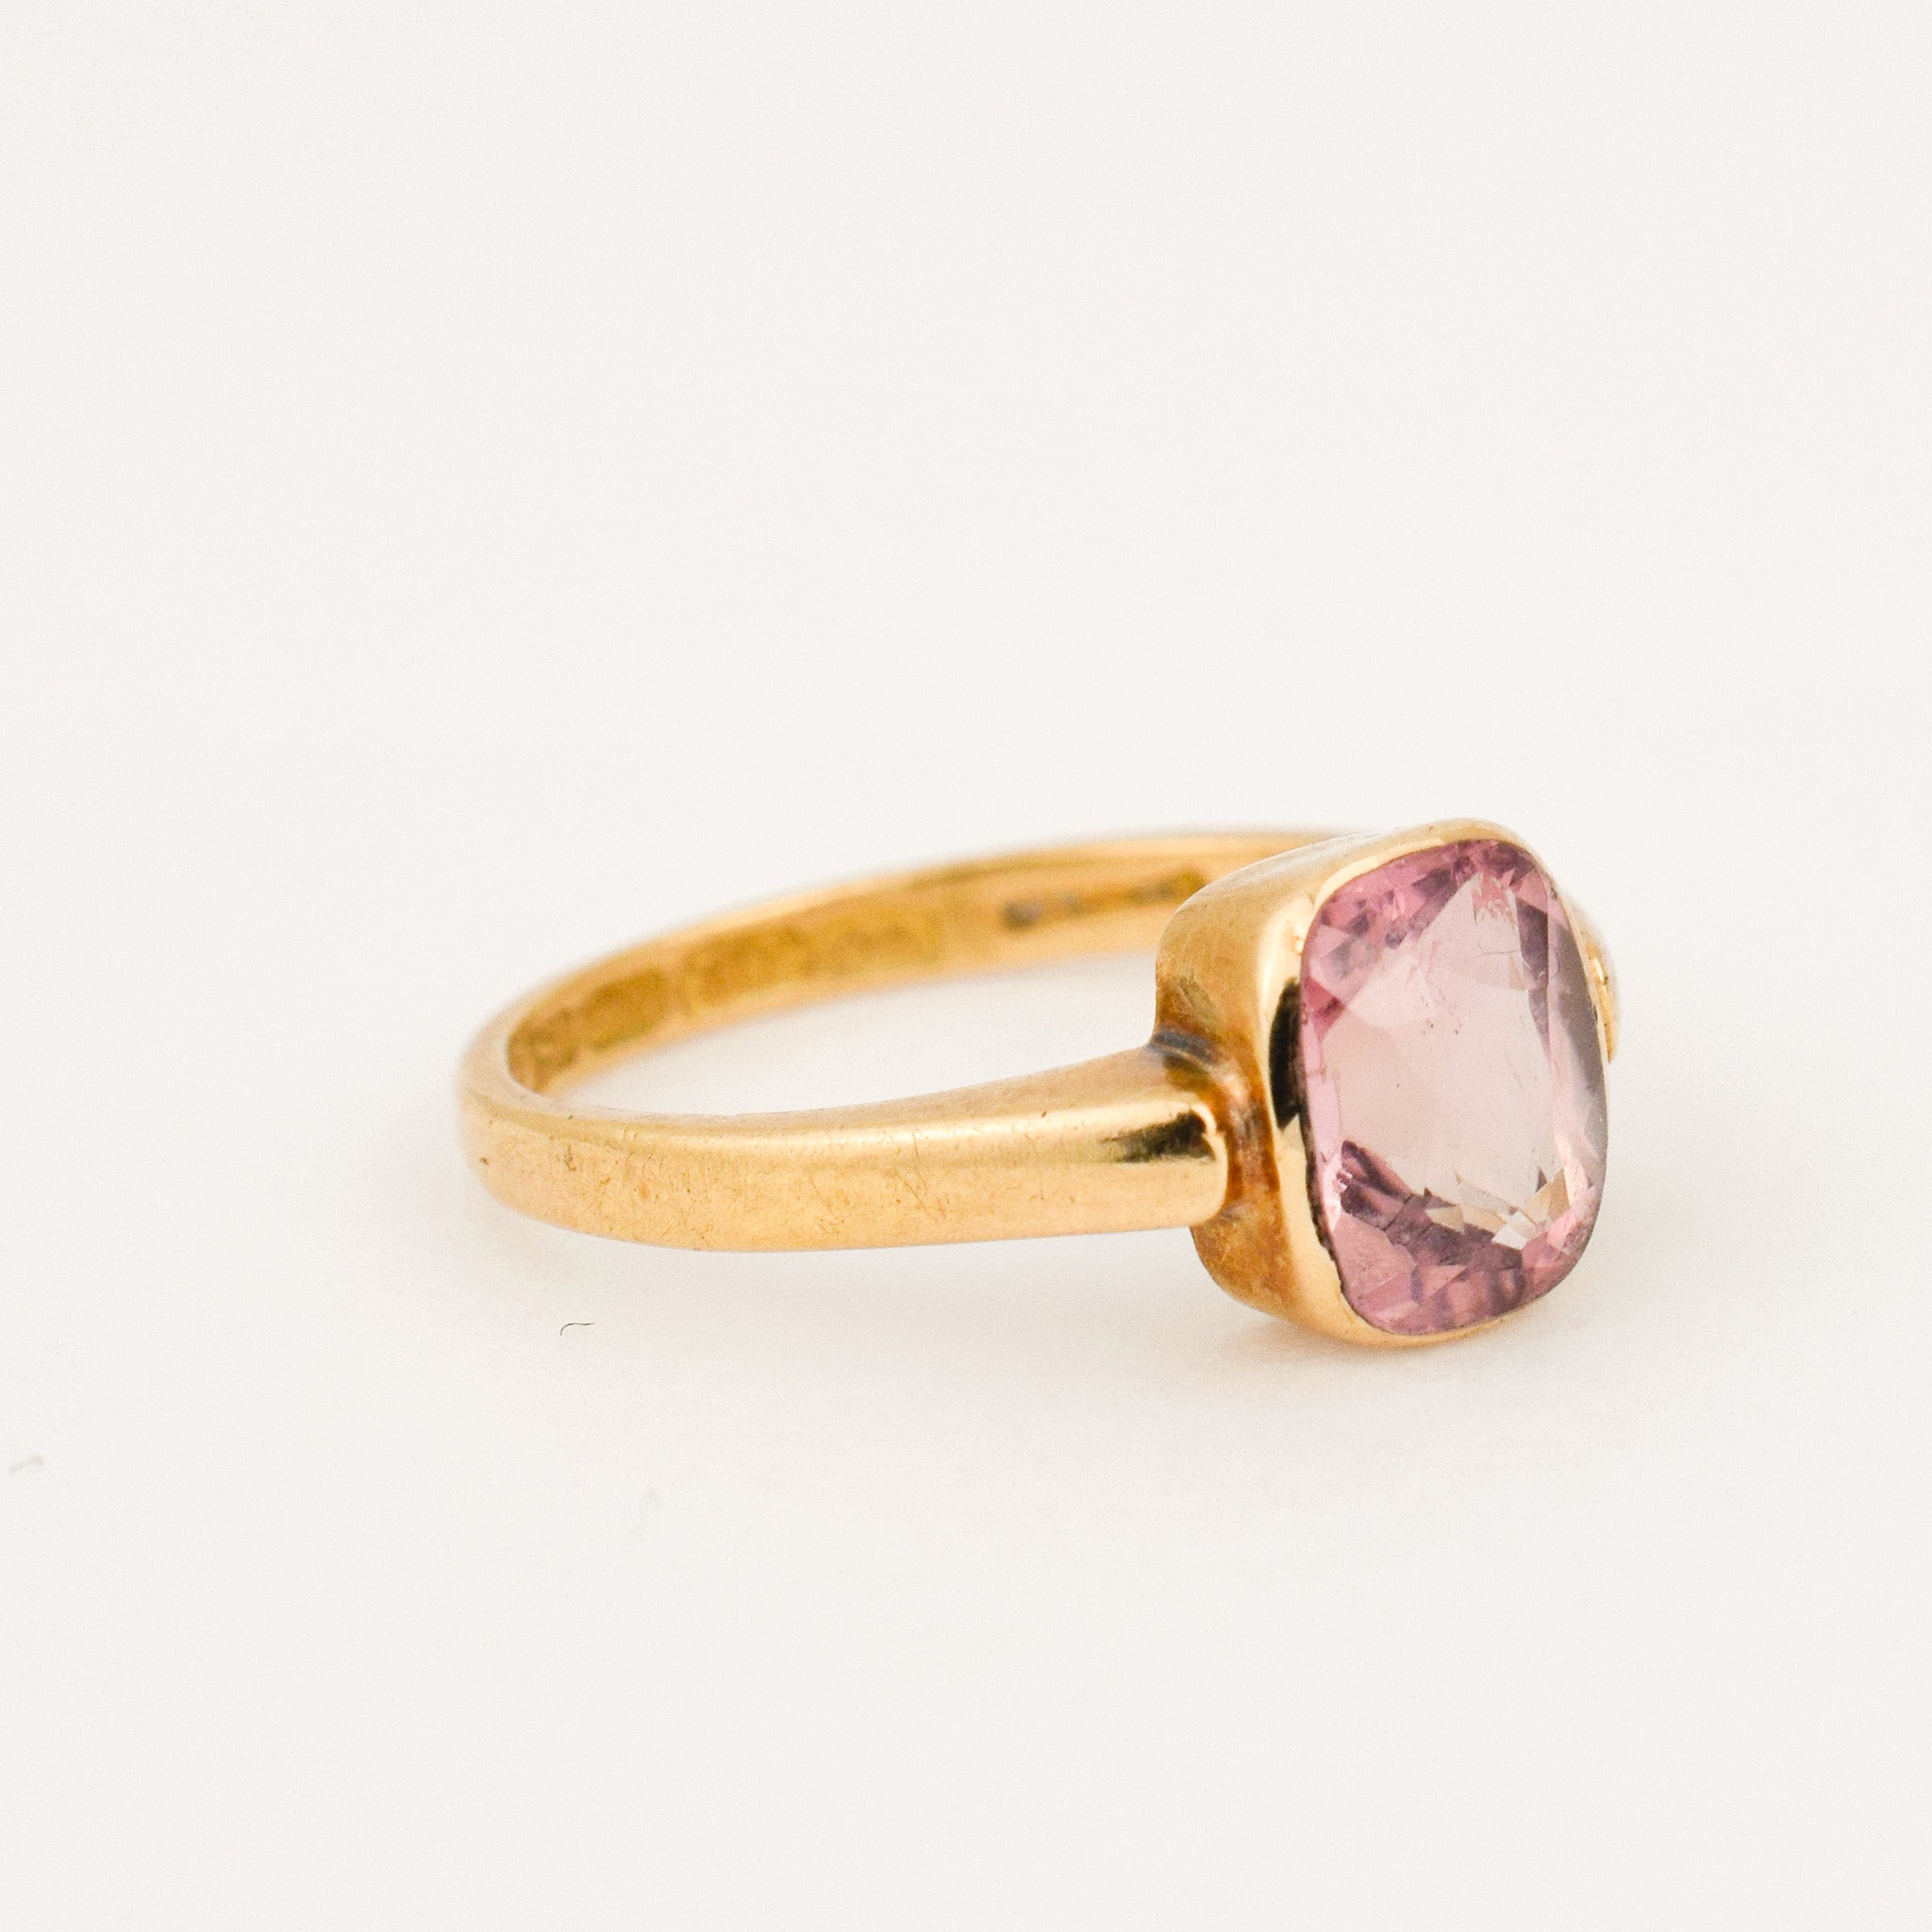 Antique Bezel Set Pink Tourmaline Ring